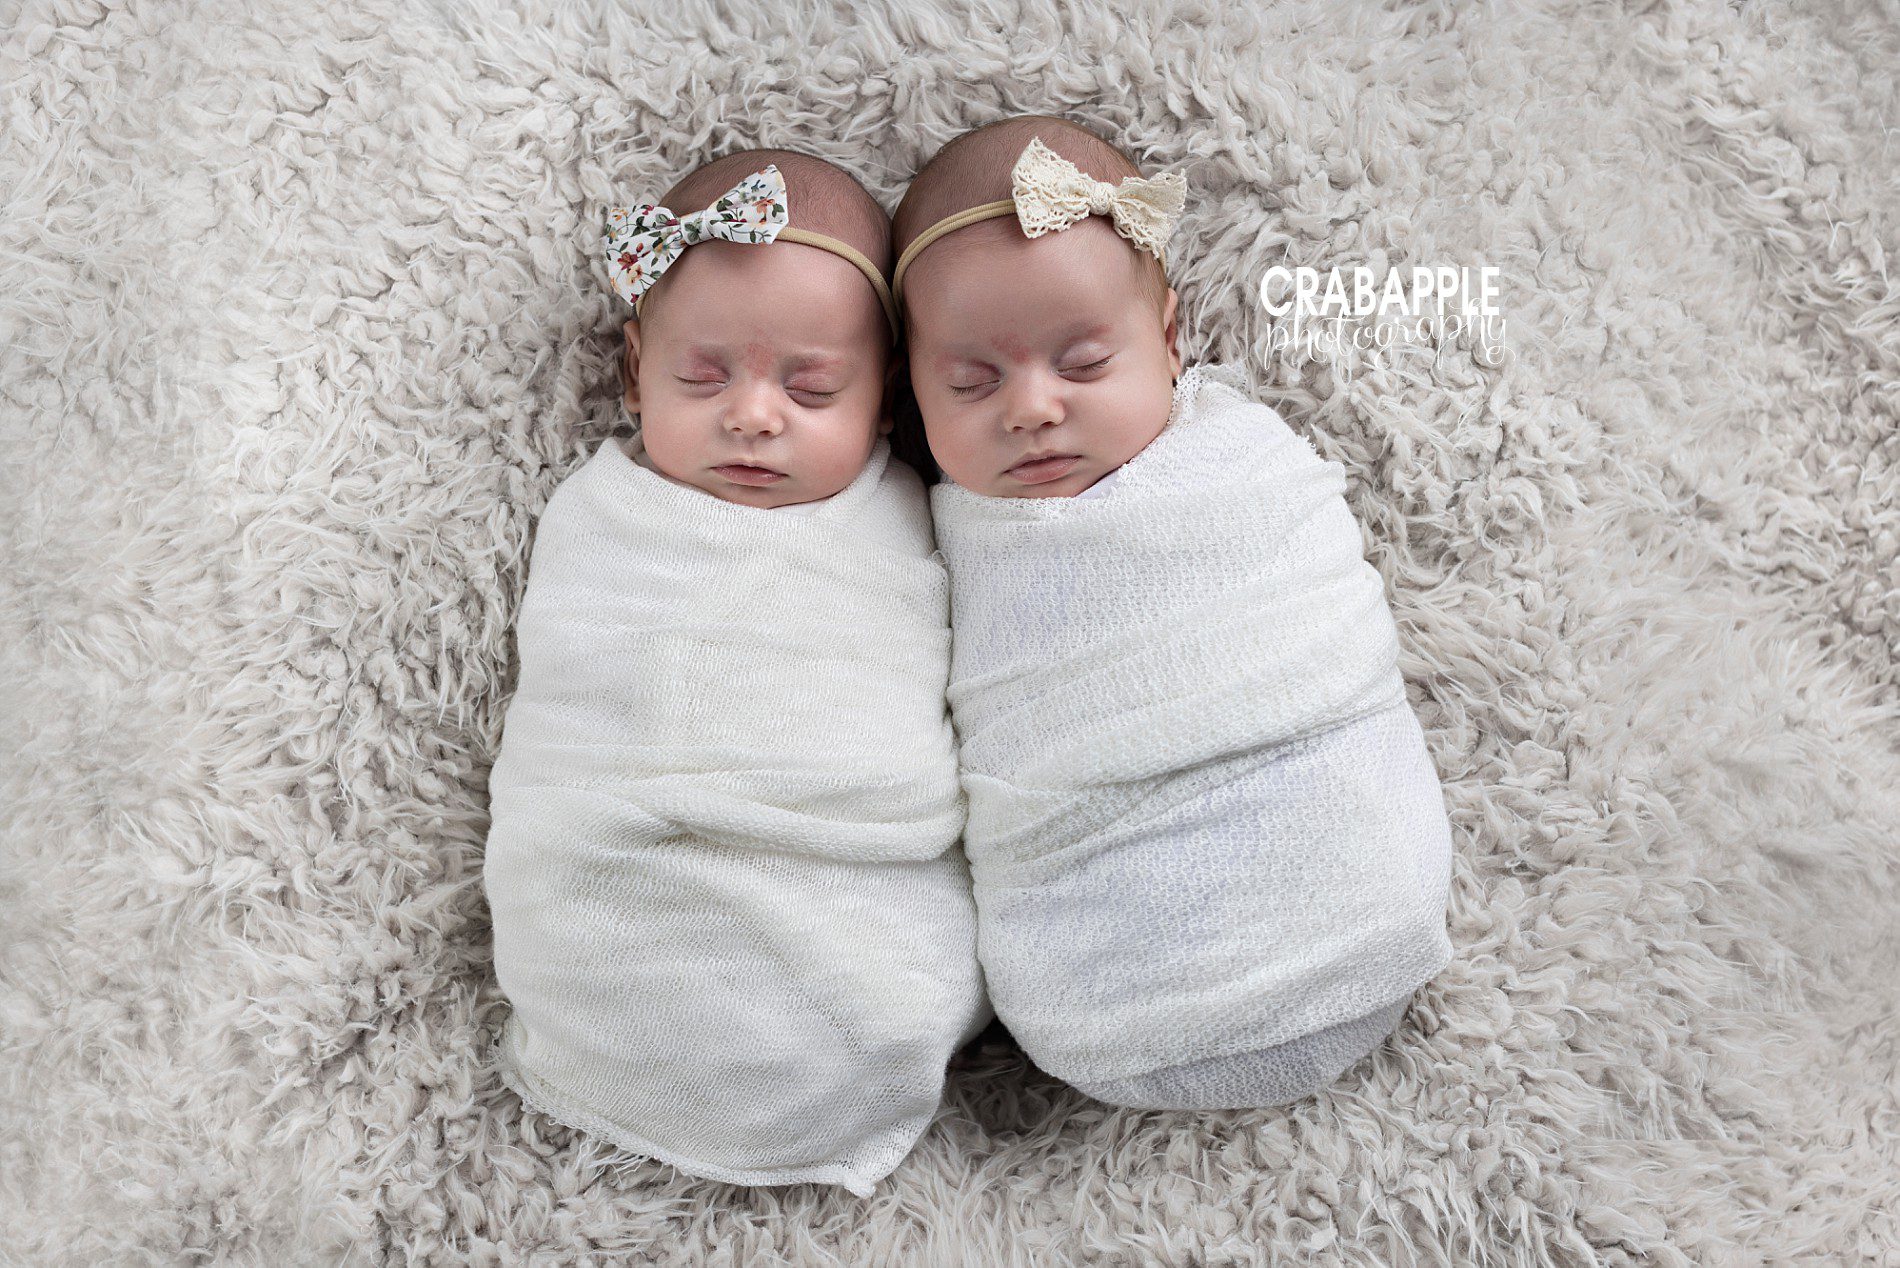 twin newborn photo styling ideas